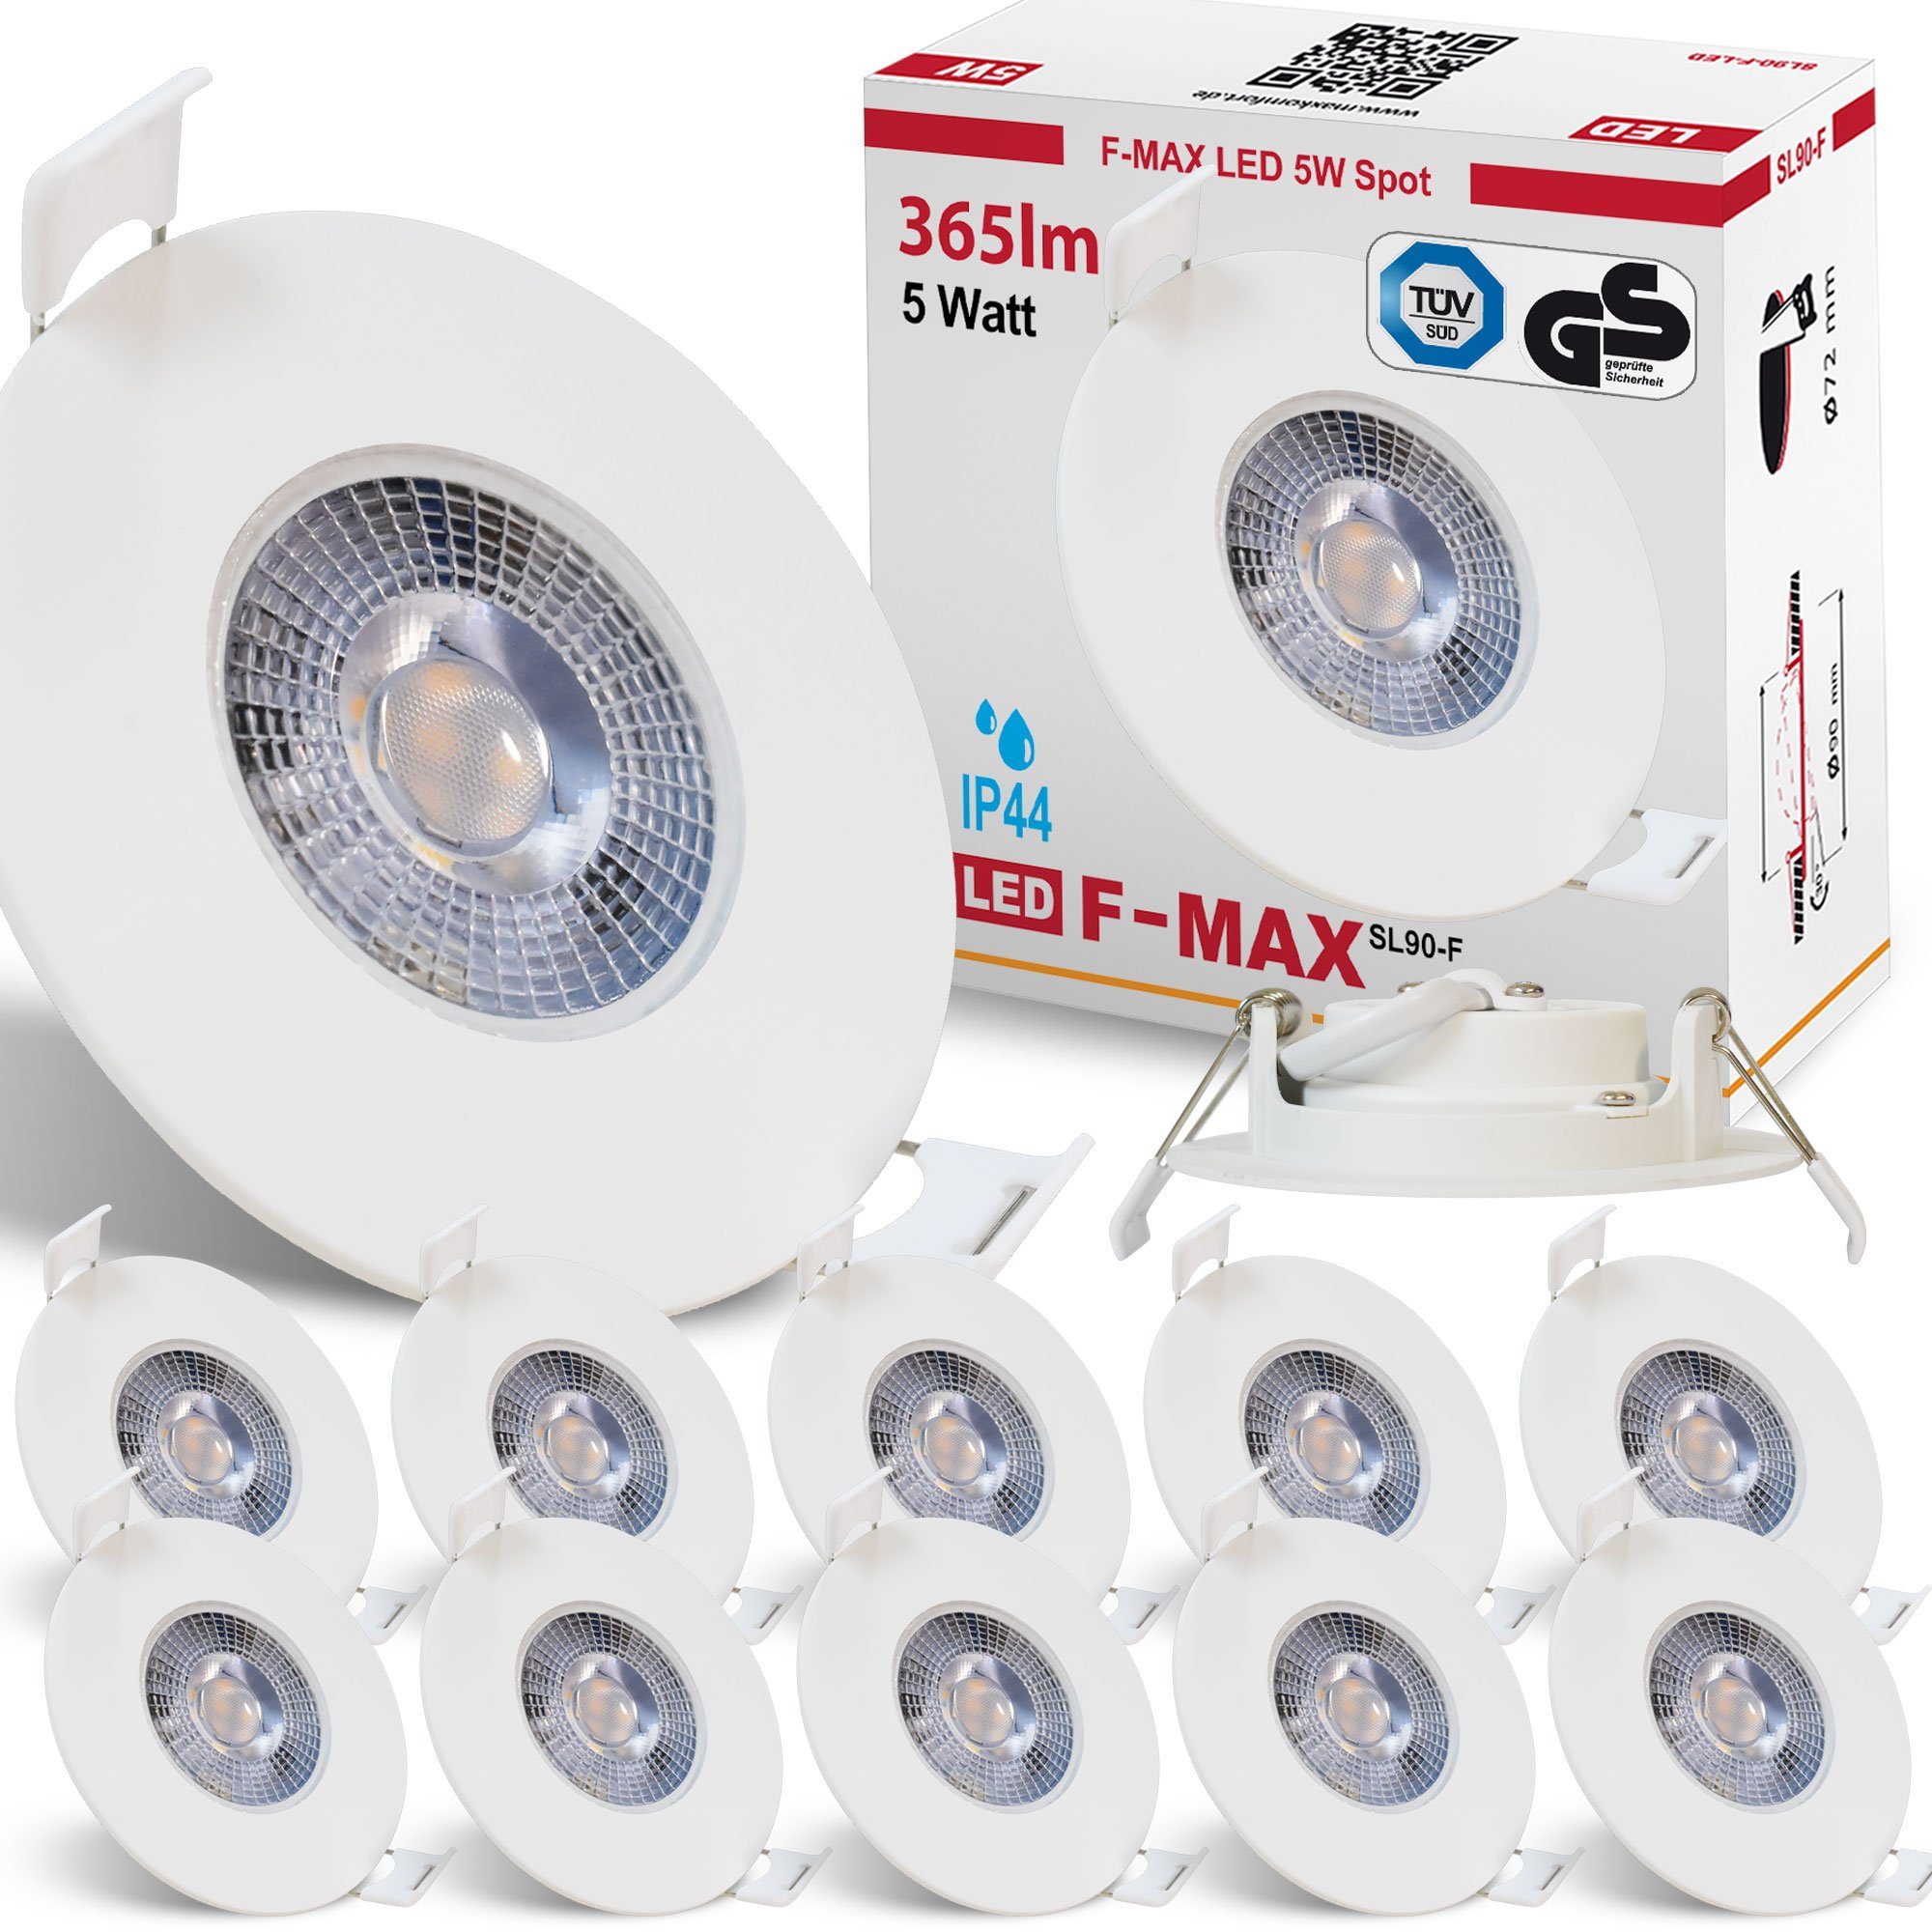 Maxkomfort LED Einbaustrahler F-Max IP44, LED fest integriert, 3000K, Warmweiß, Einbauspot, IP44, Spot, 3-Stufen Dimmbar, Warmweiß, Flach, Rund